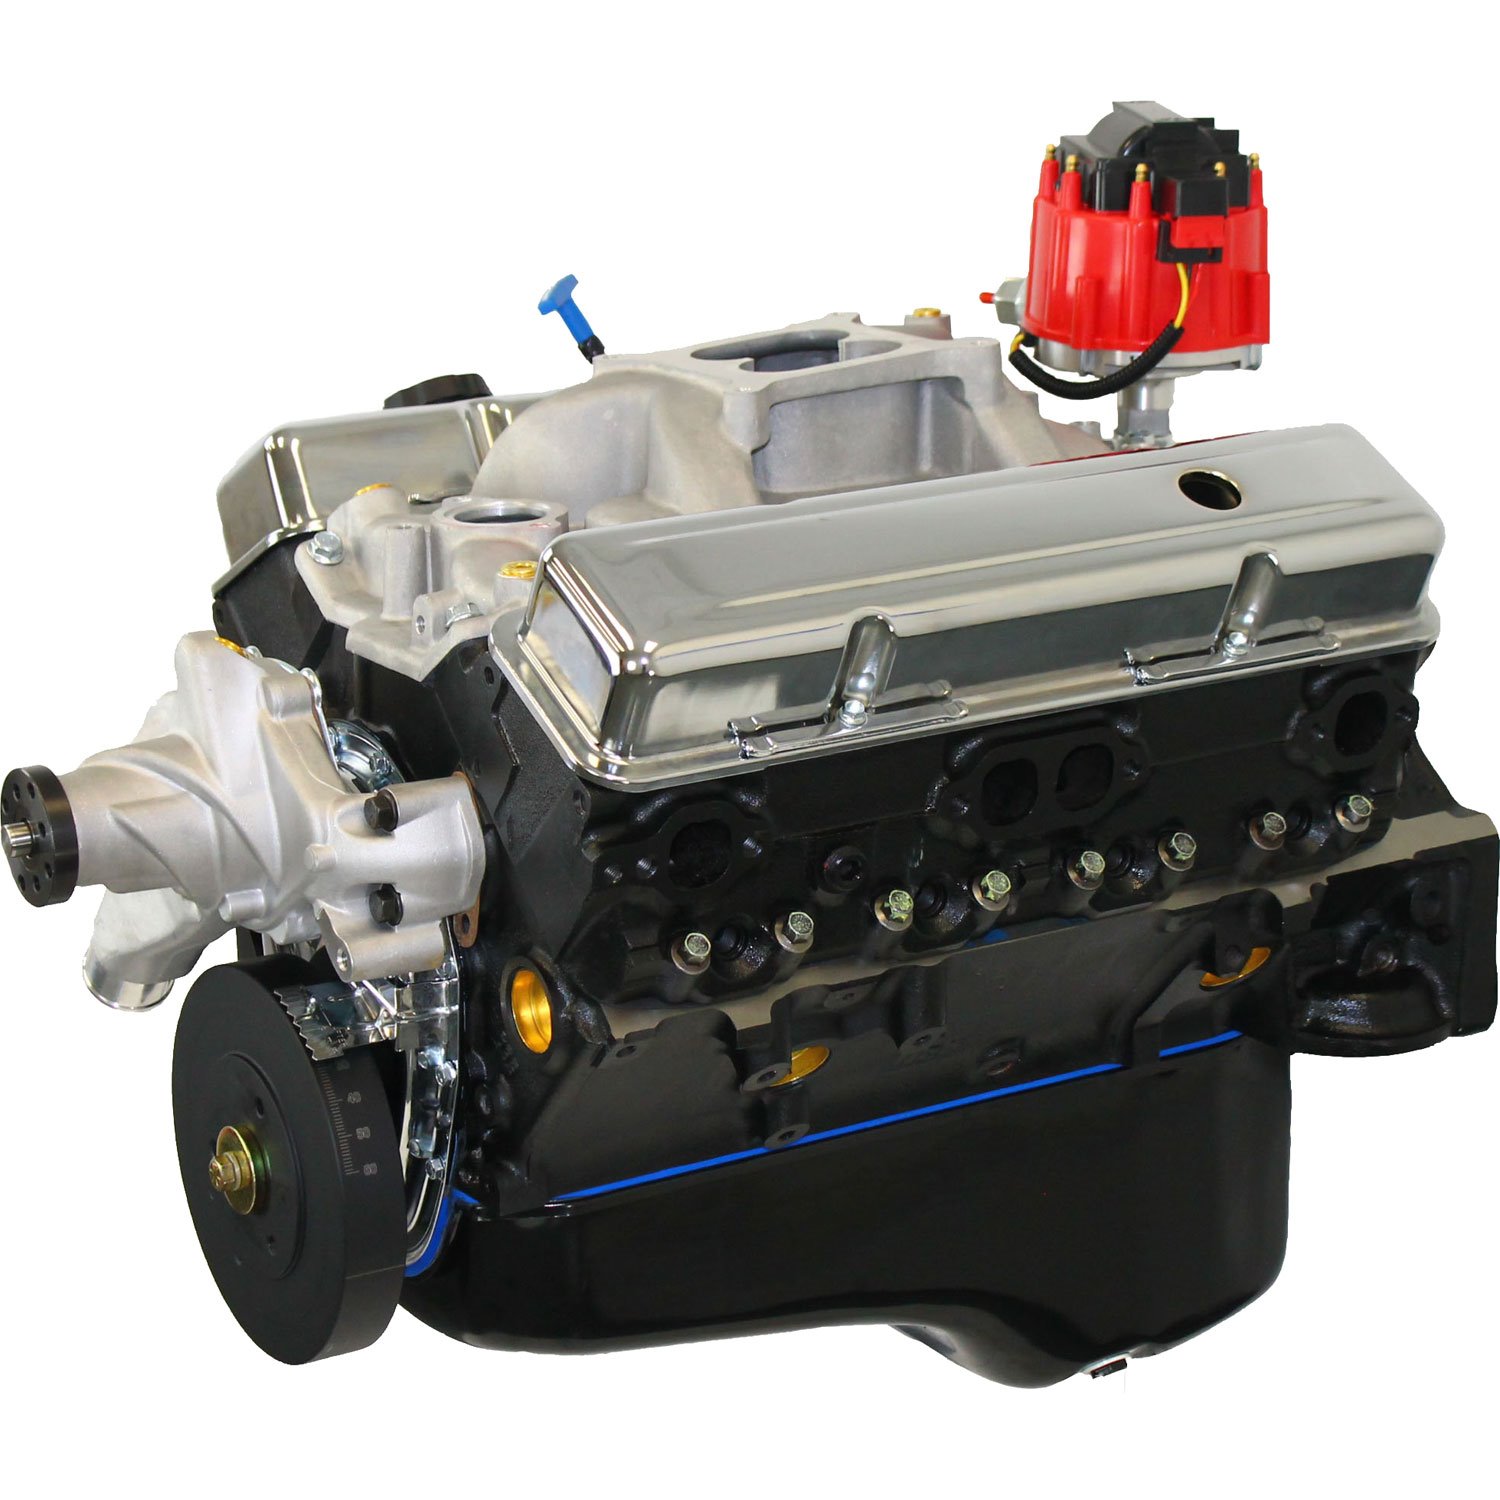 Chevy Small Block 350ci Dress Crate Engine 325HP 375TQ w/Cast Iron Heads